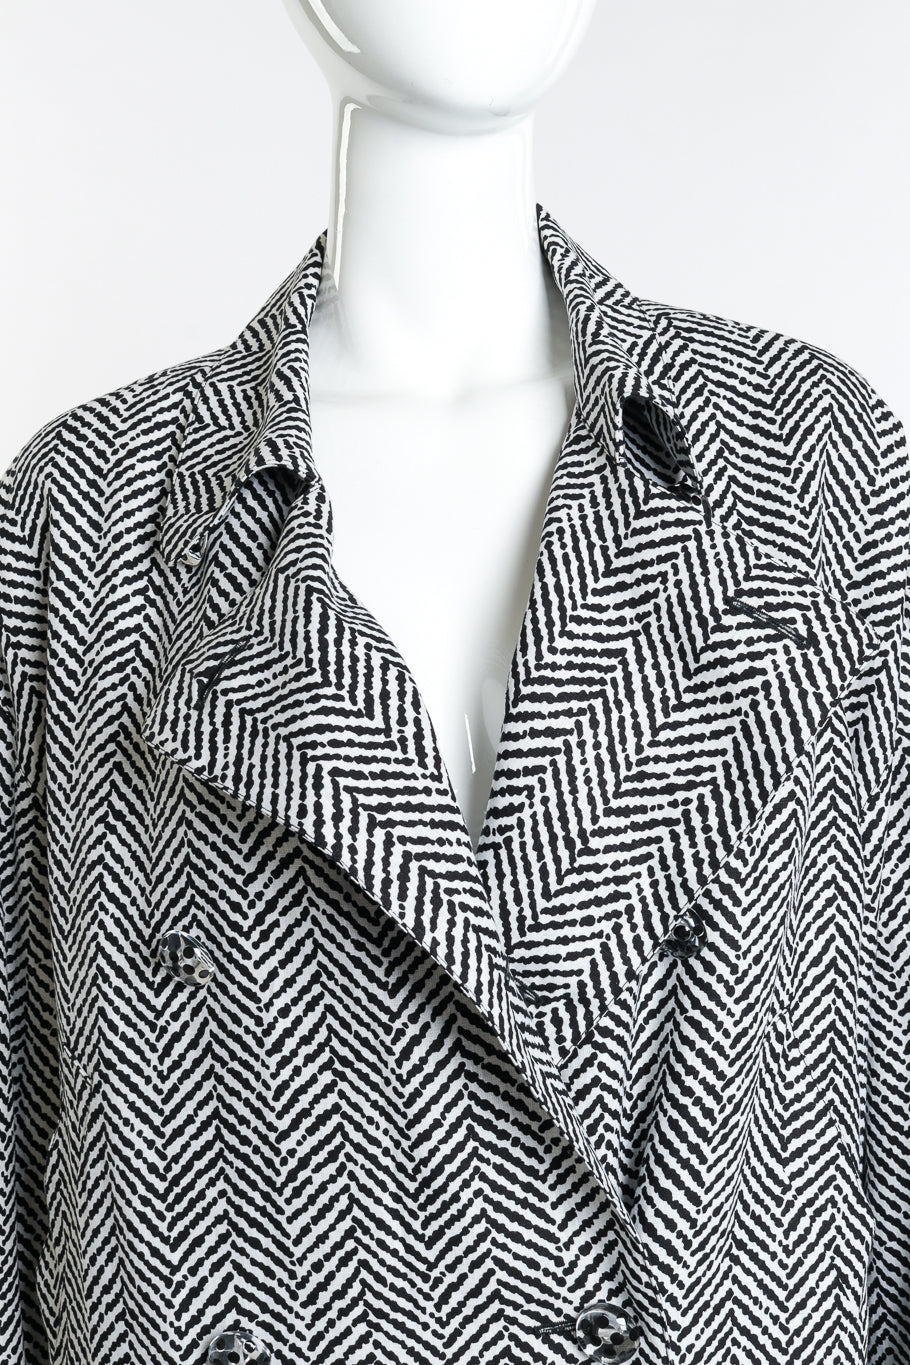 Vintage Geoffrey Beene Double Breasted Chevron Stripe Jacket front on mannequin unbuttoned closeup @recess la